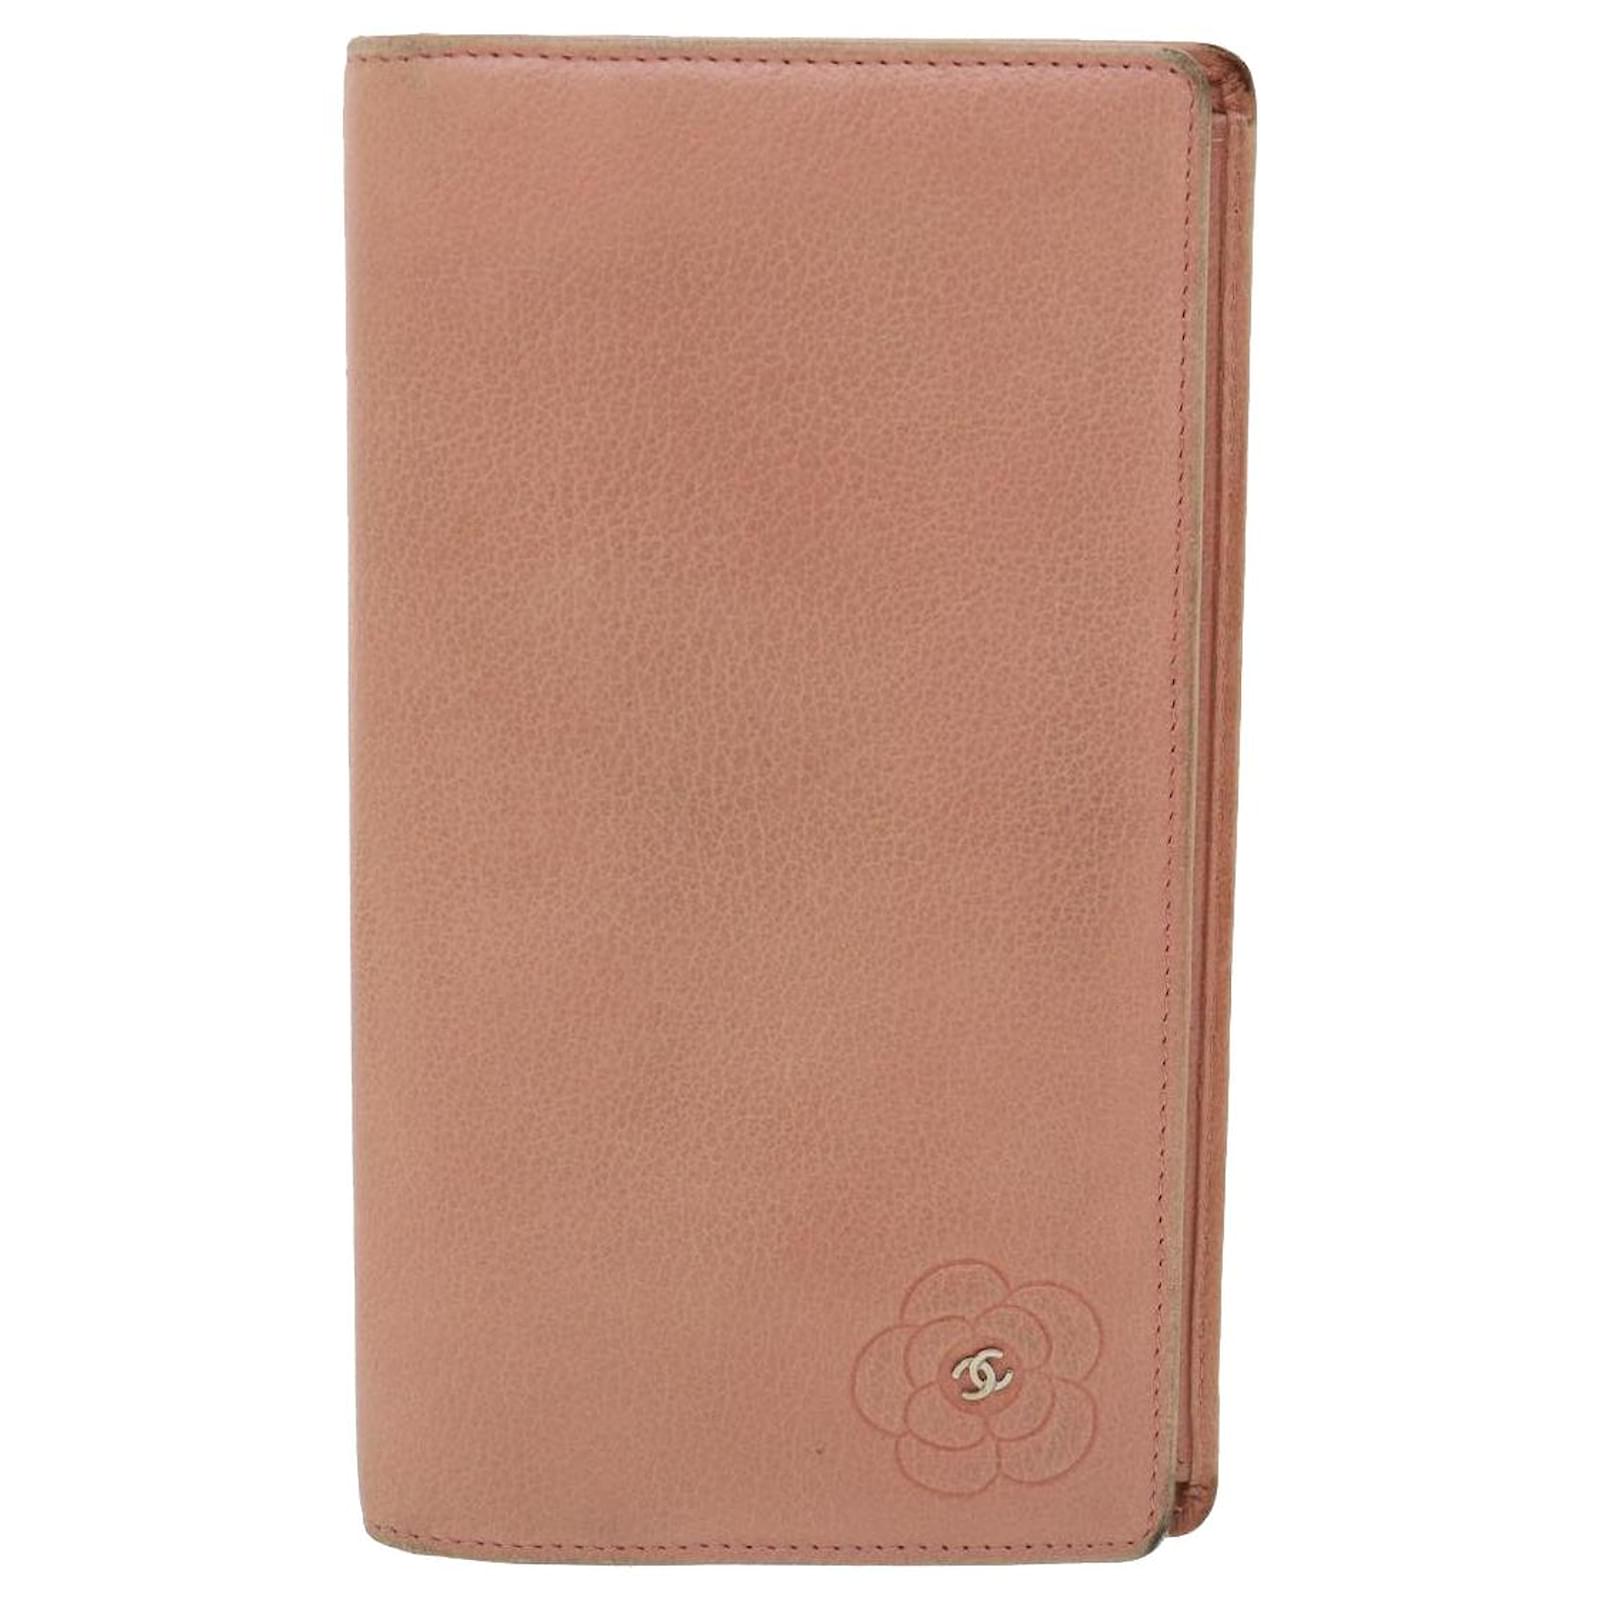 Chanel Wallet in Pink Leather – Fancy Lux